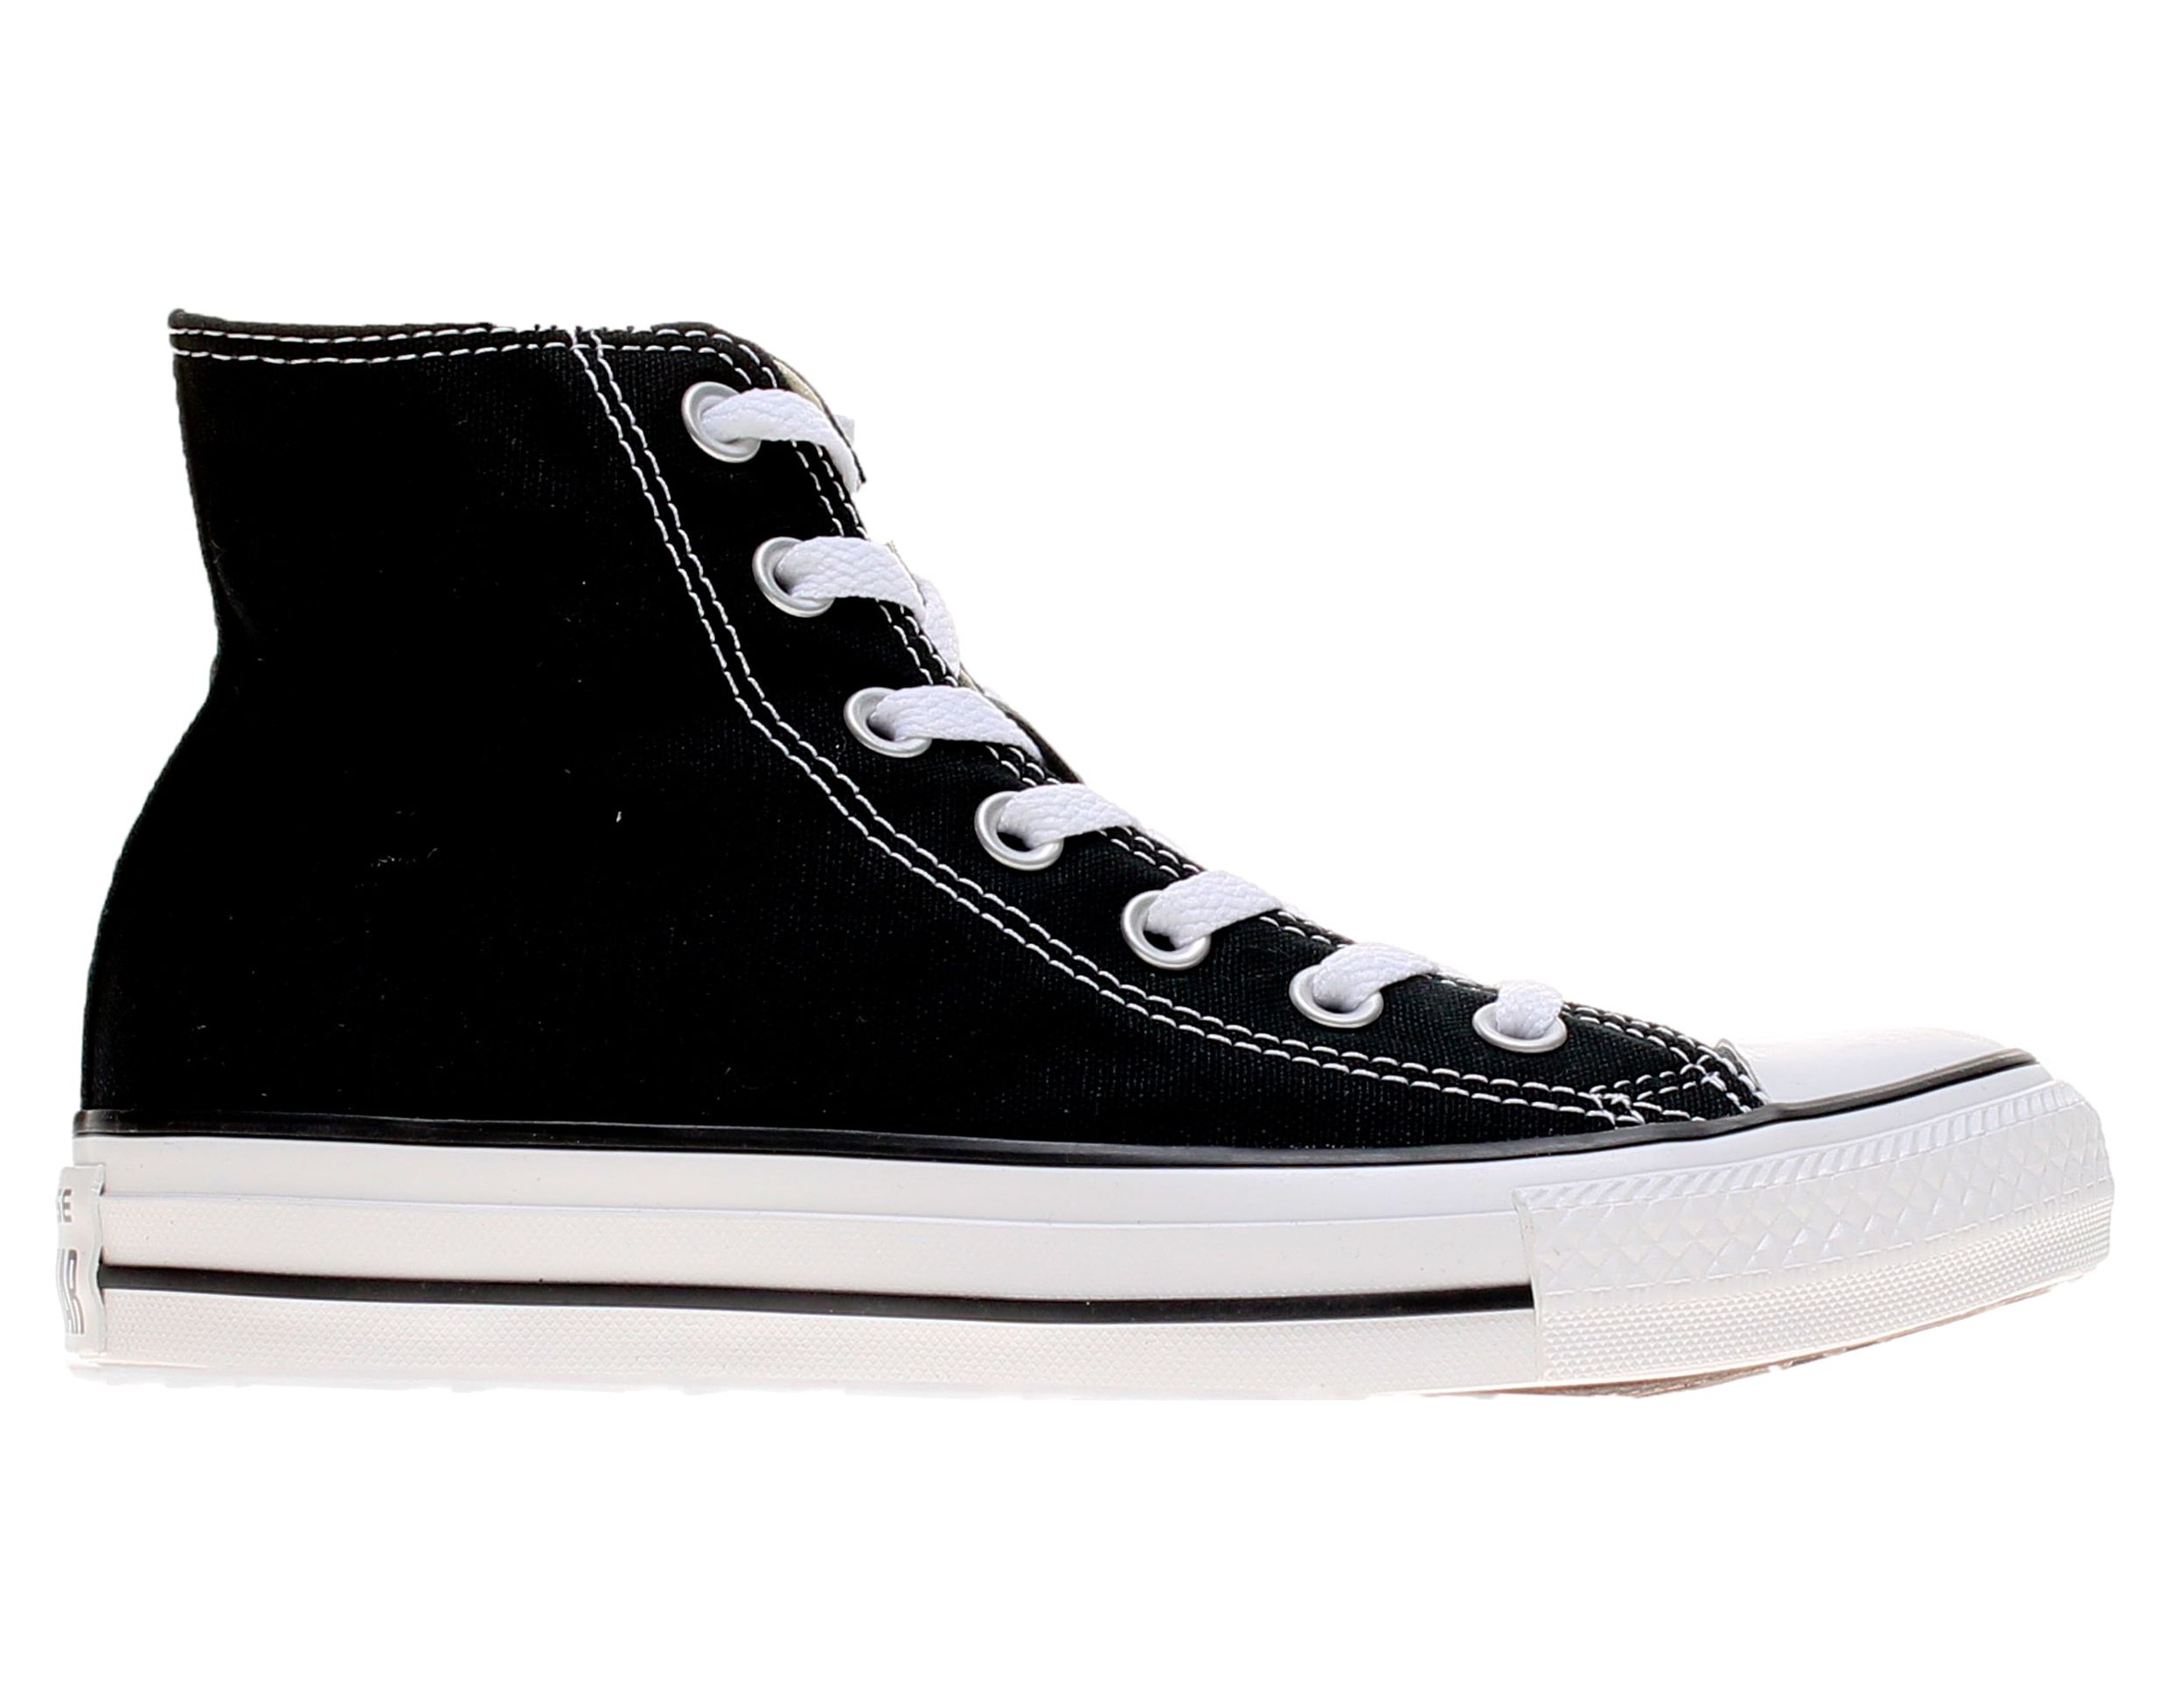 Converse M9160: Chuck Taylor All Star High Top Unisex Black White Sneakers (6 US Men 8 US Women 6 UK 39 EU, Black White) - image 2 of 6